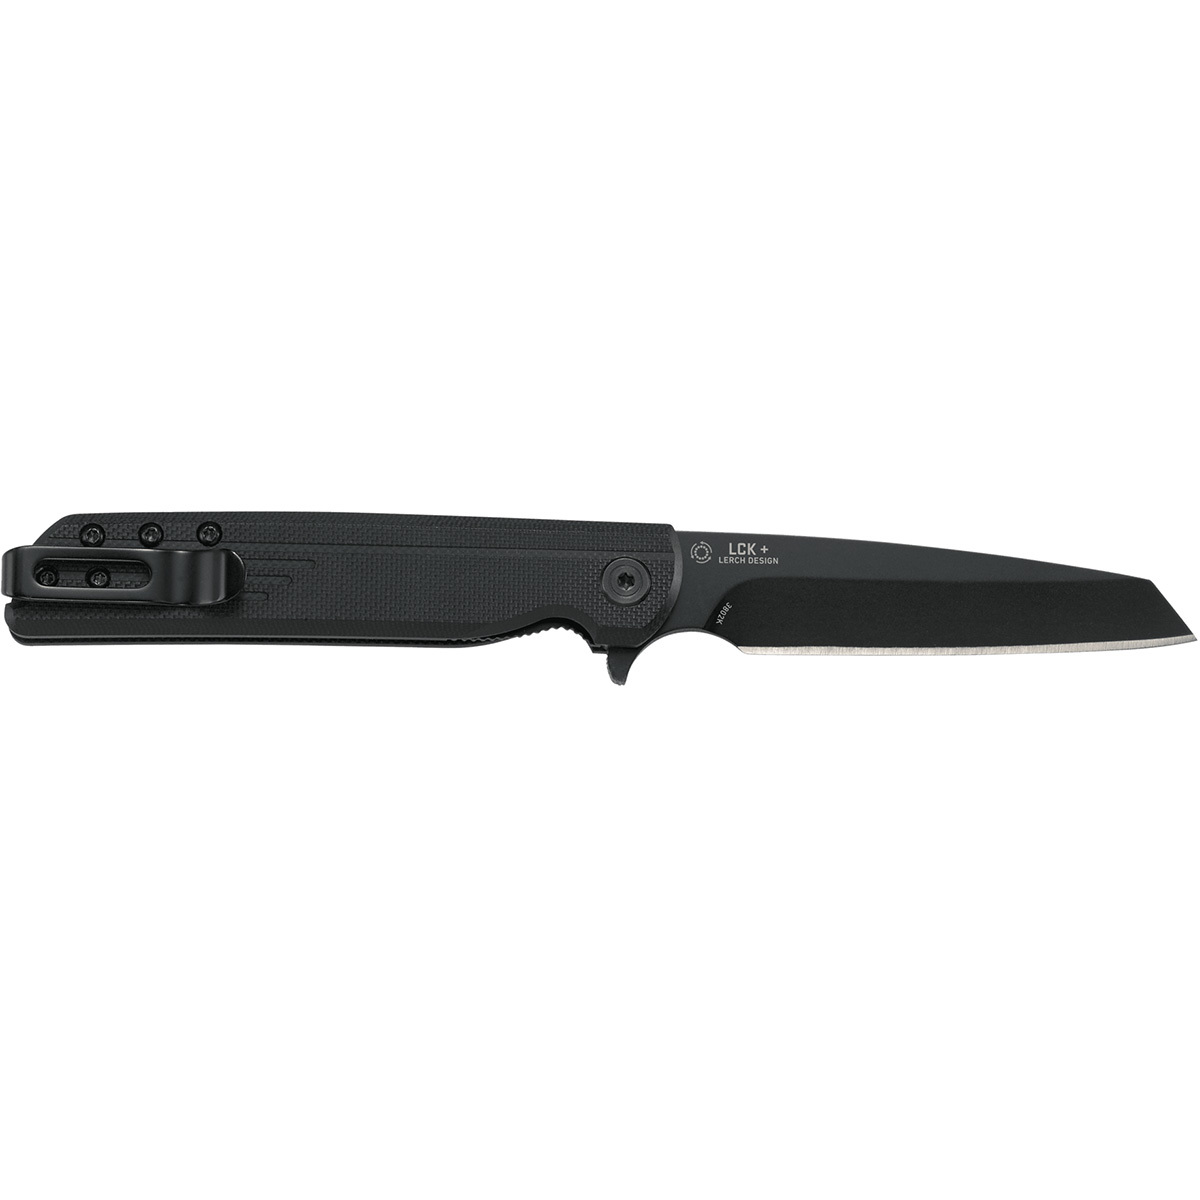 Полуавтоматический складной нож CRKT LCK+ Tanto Blackout, сталь 8Cr13MoV, рукоять термопластик GRN - фото 2